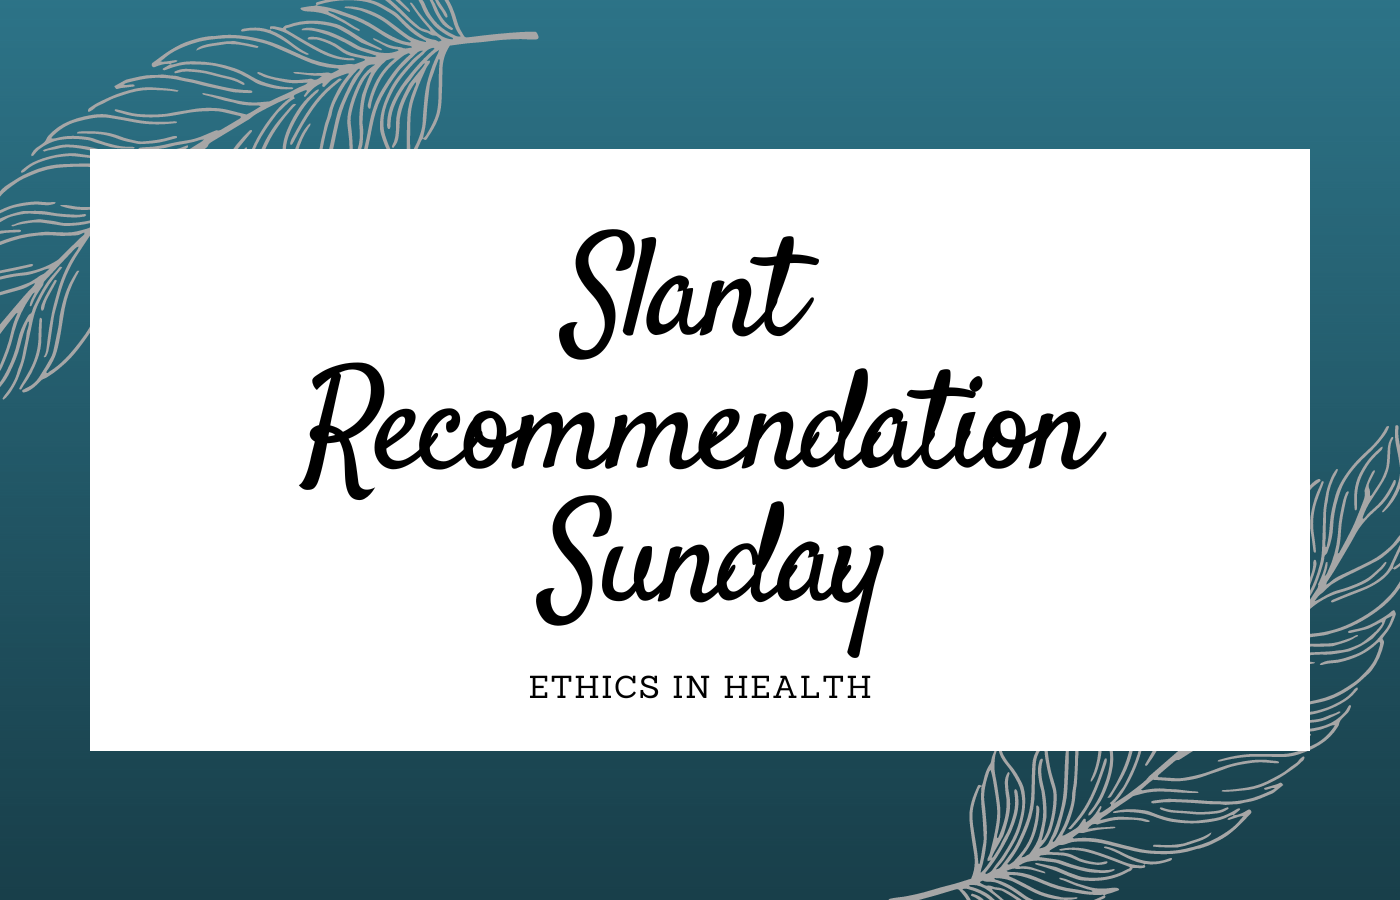 Slant Recommendation Sunday: Ethics in Health